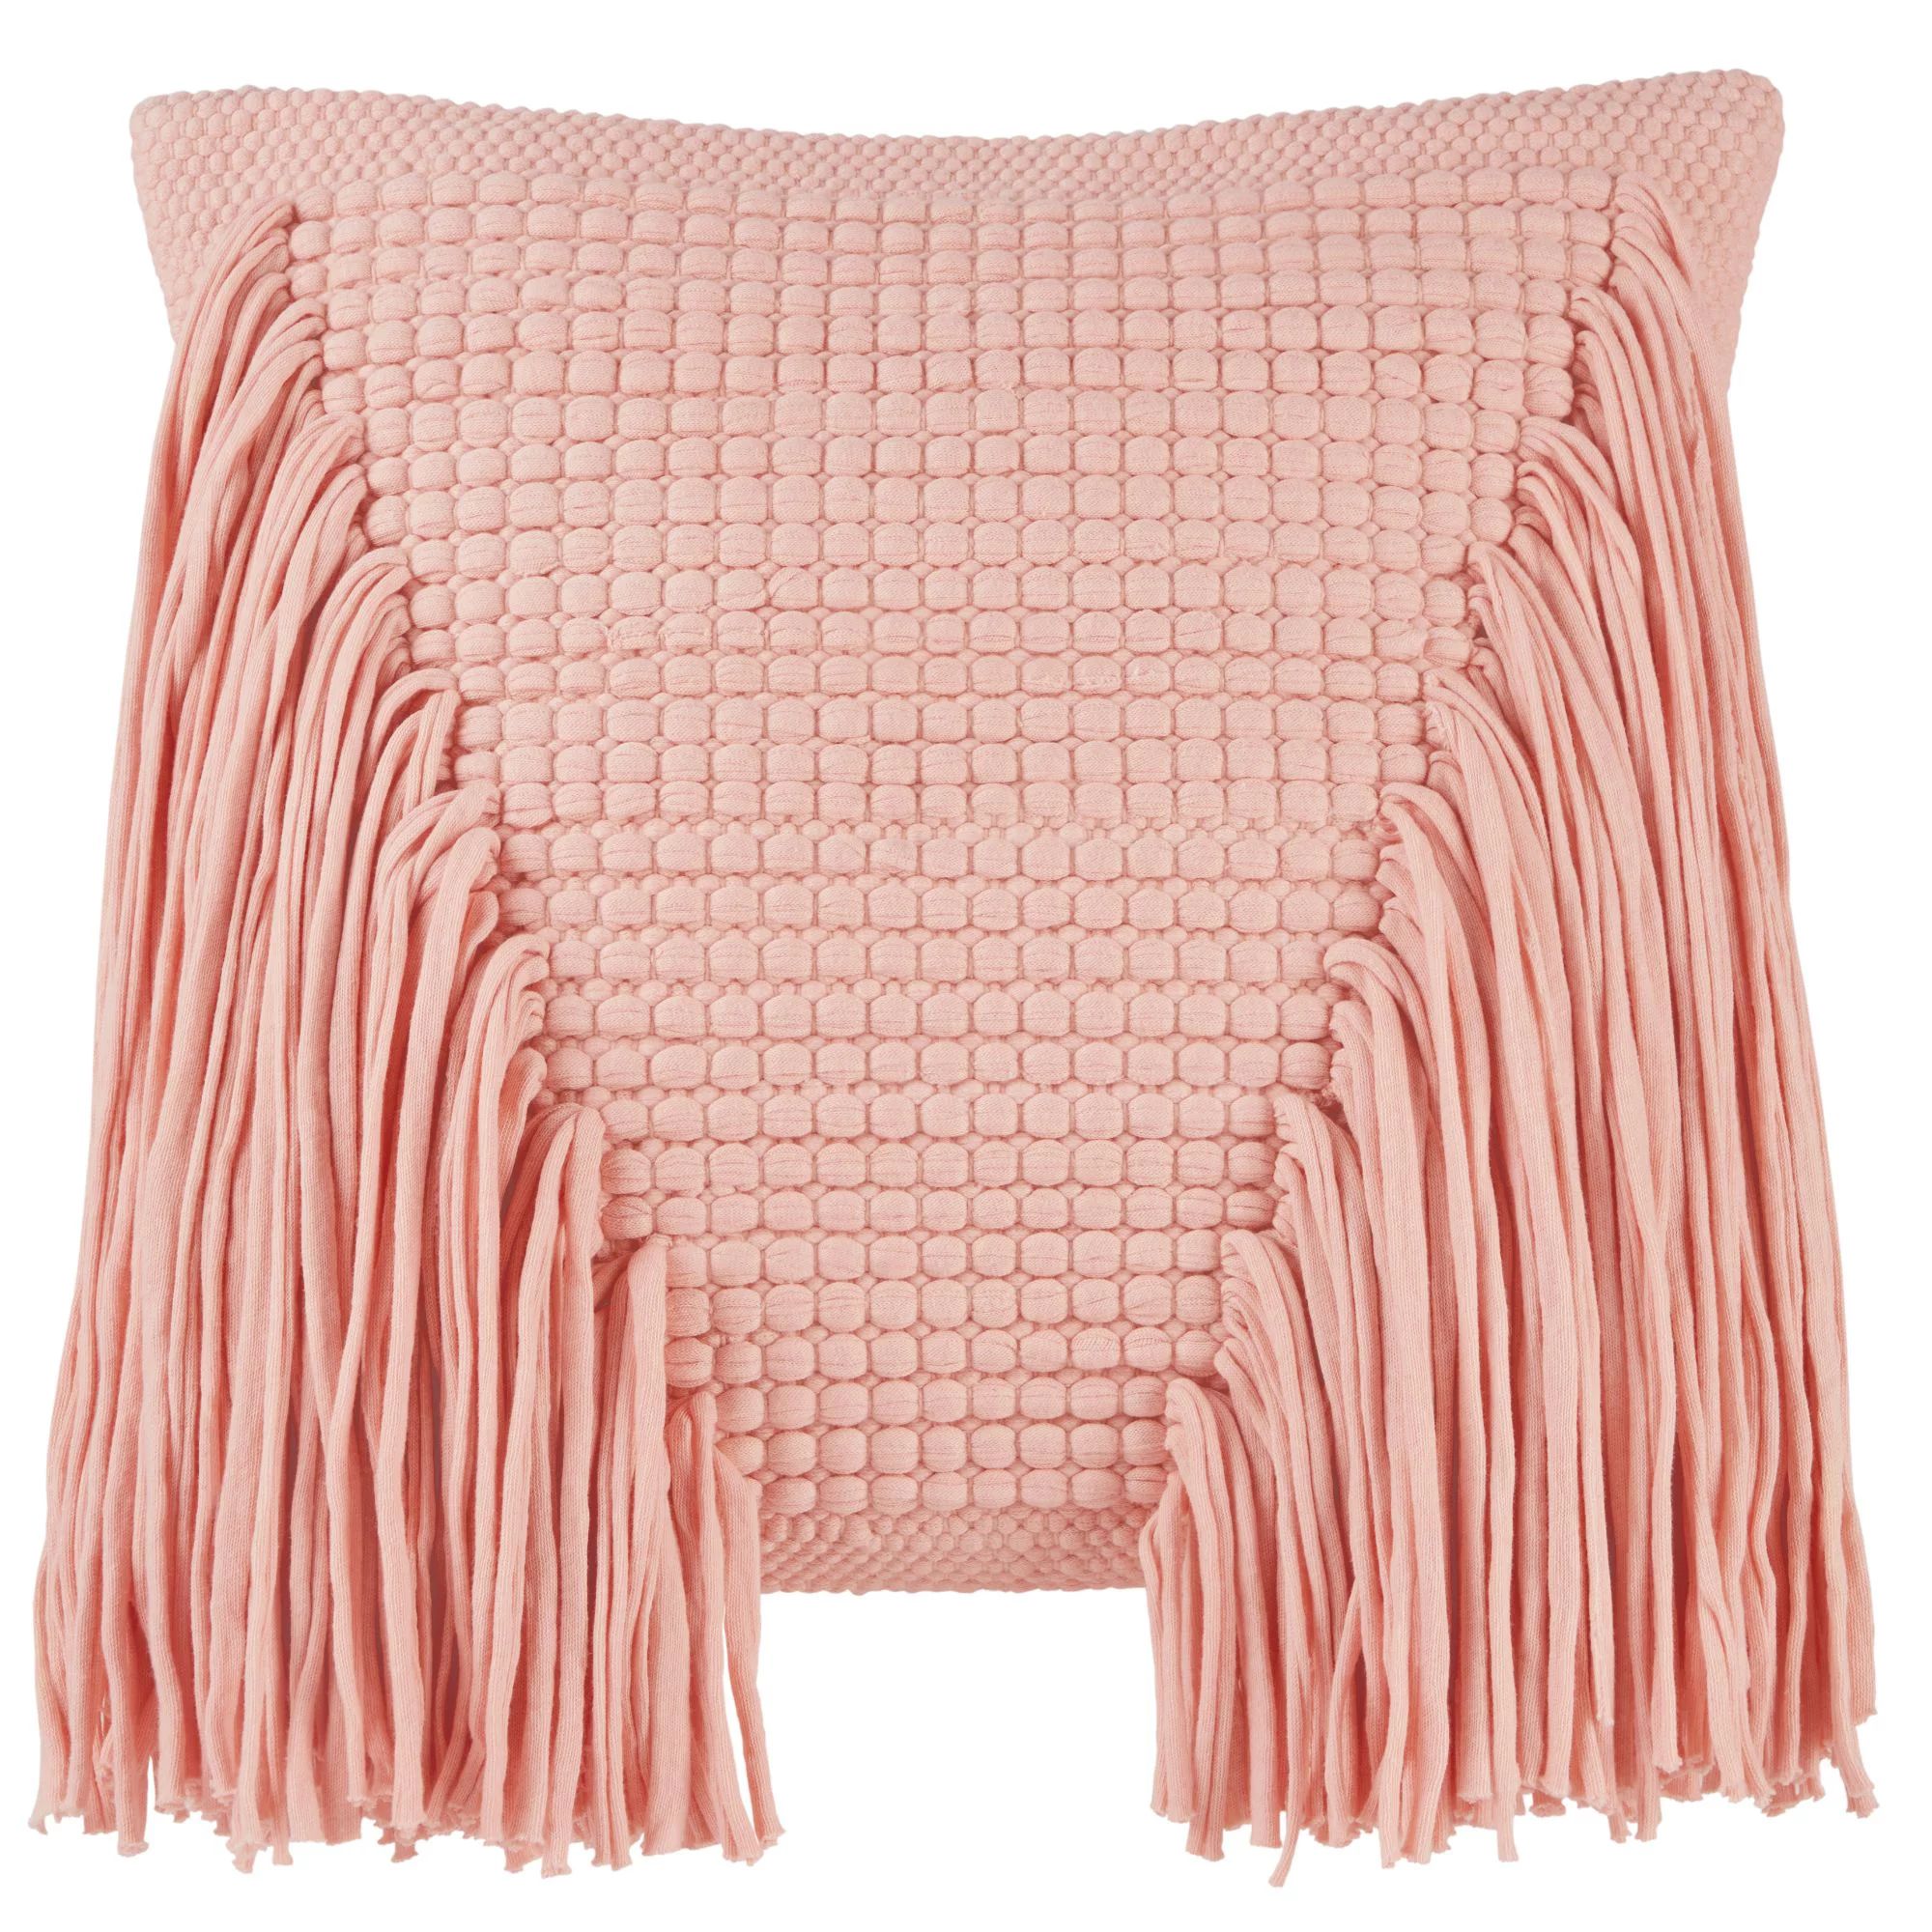 Wanda June Home Jersey Knit Fringe Pillow, Pink, 18"x18" by Miranda Lambert | Walmart (US)